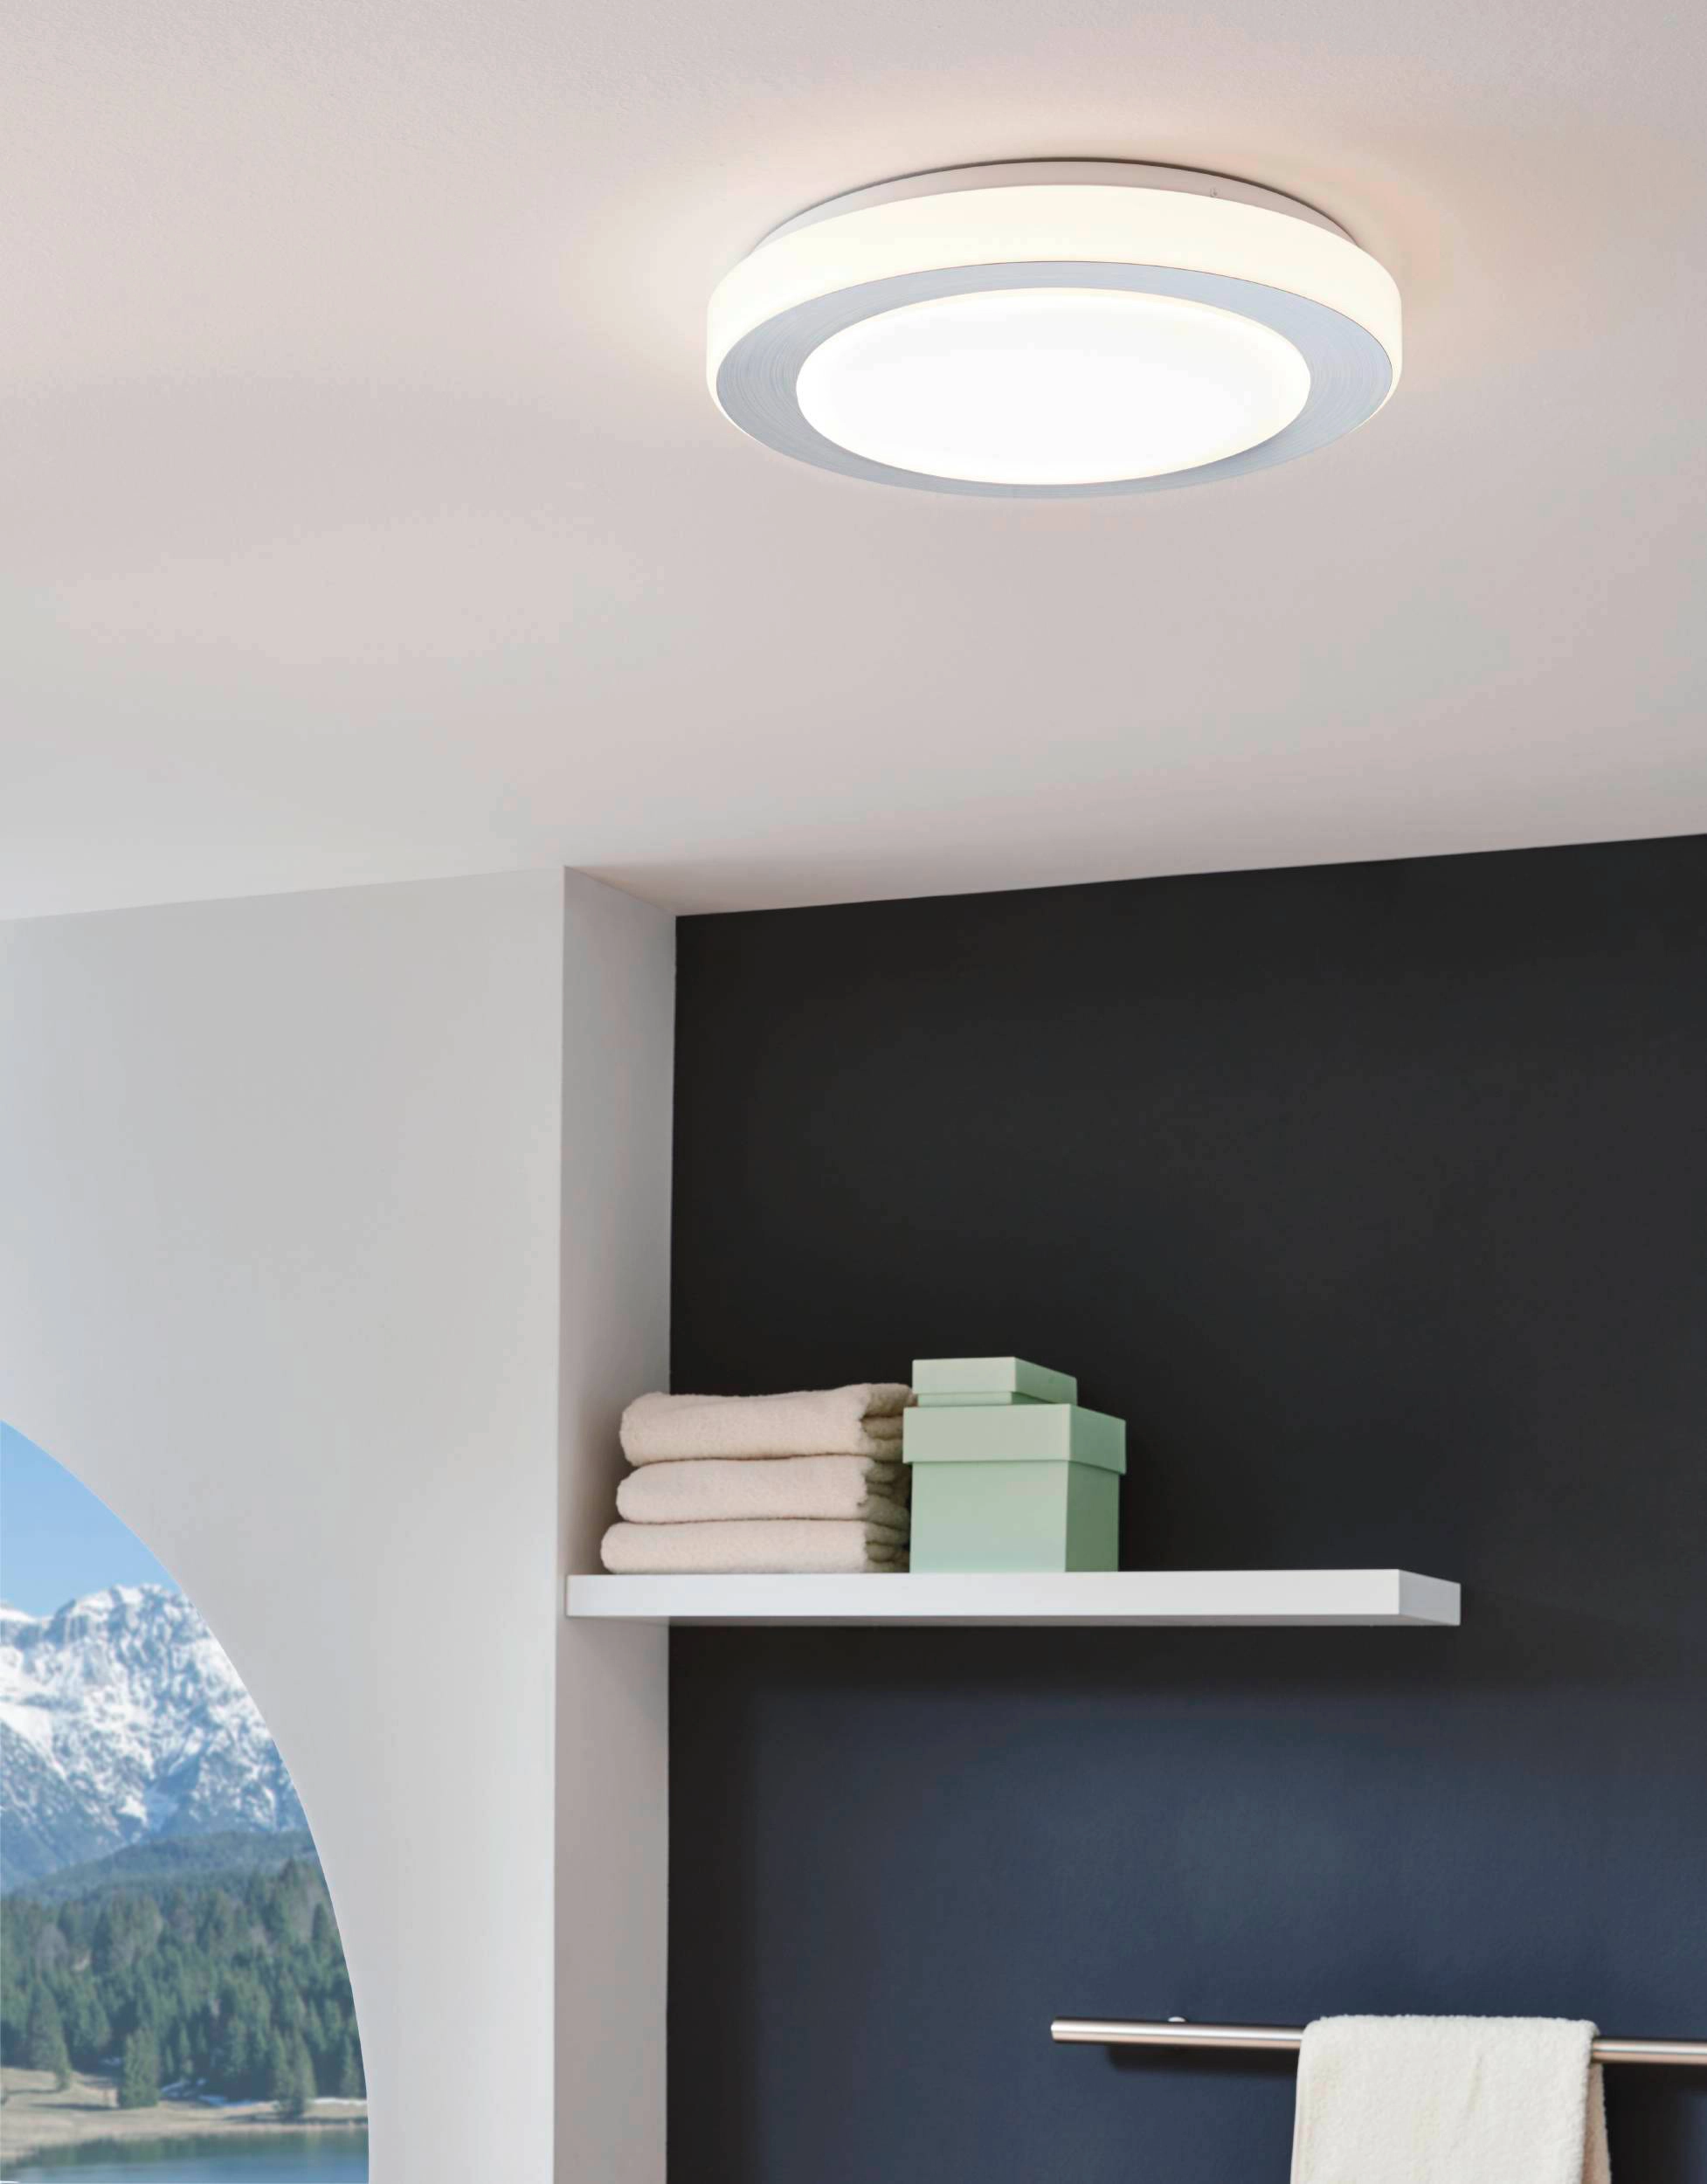 Eglo LED Deckenleuchte Carpi 3-flammig Weiß kaufen W Alu 3,6 OBI bei